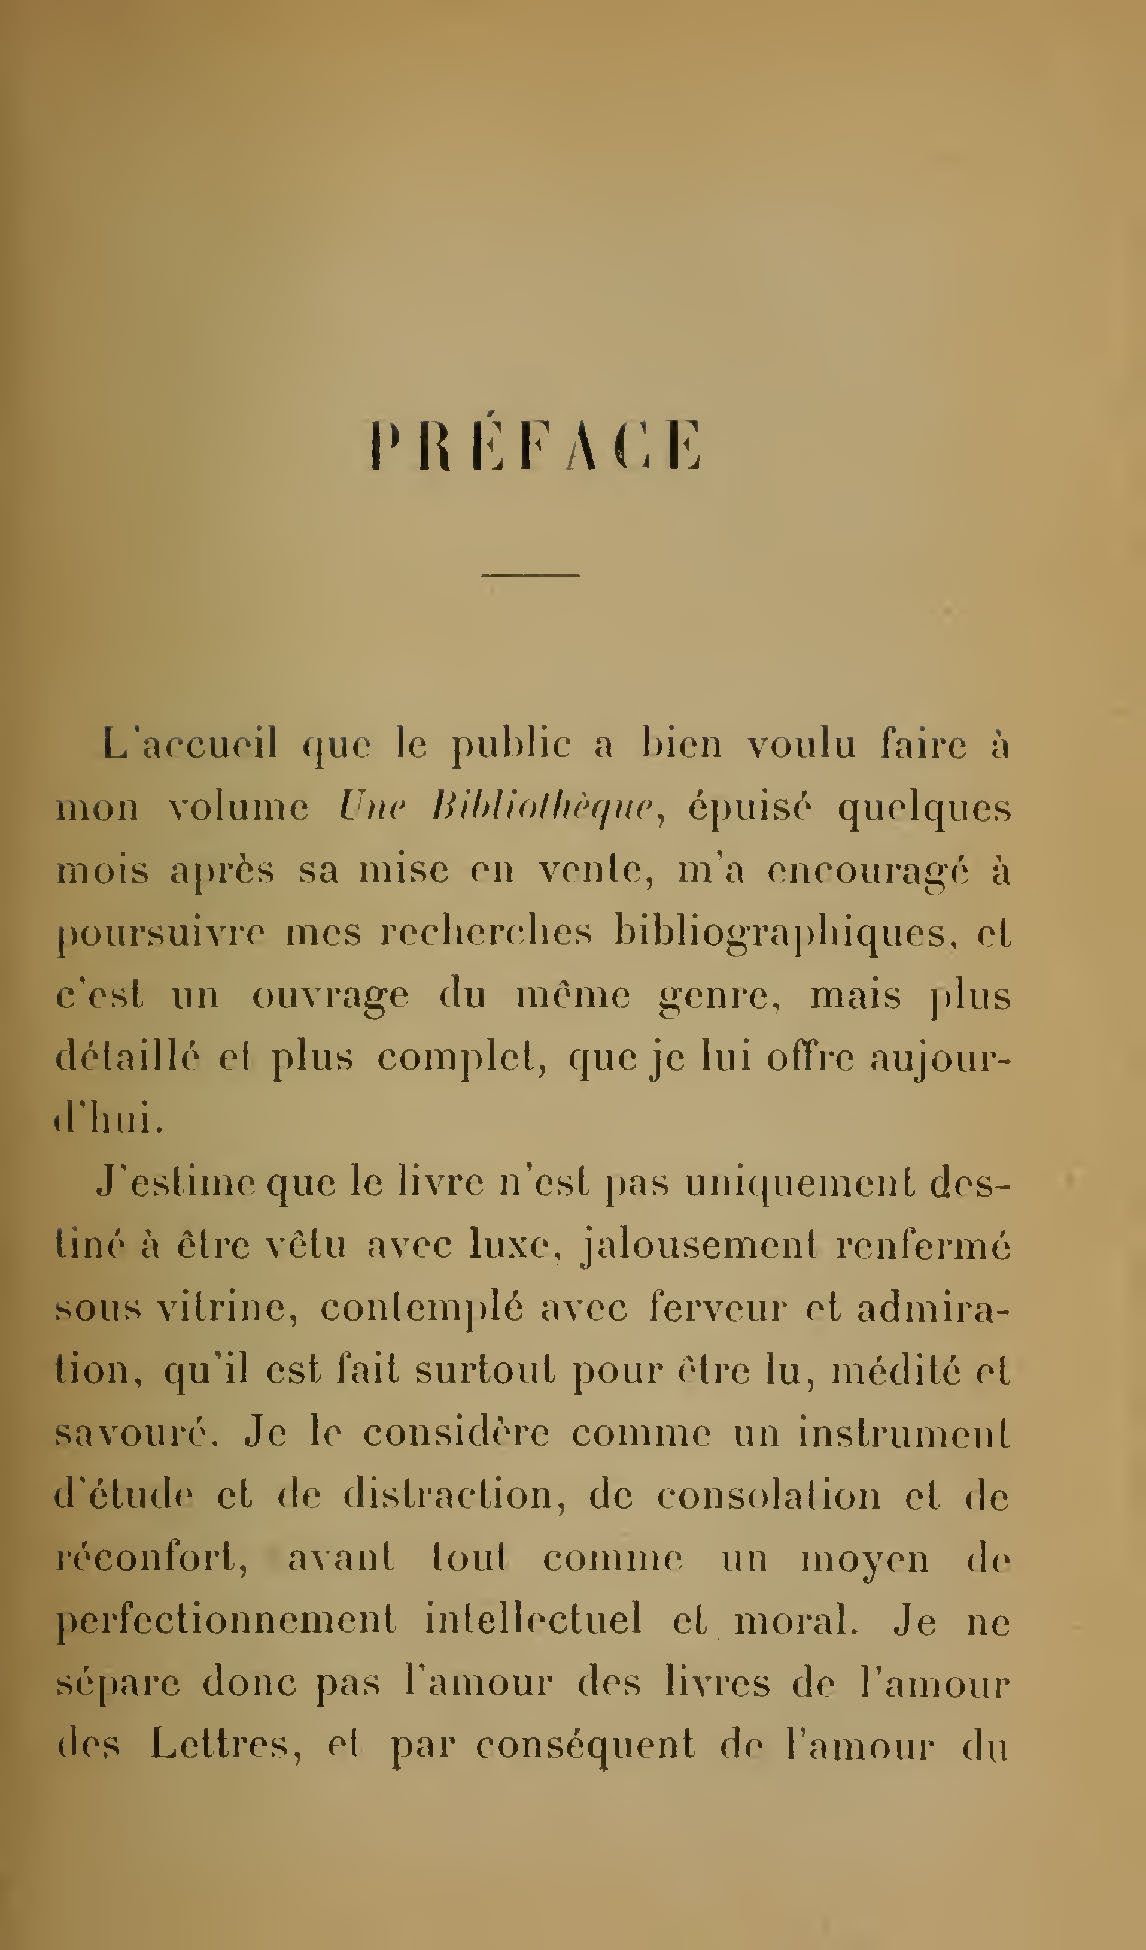 Albert Cim, Le Livre, t. I, p. I.